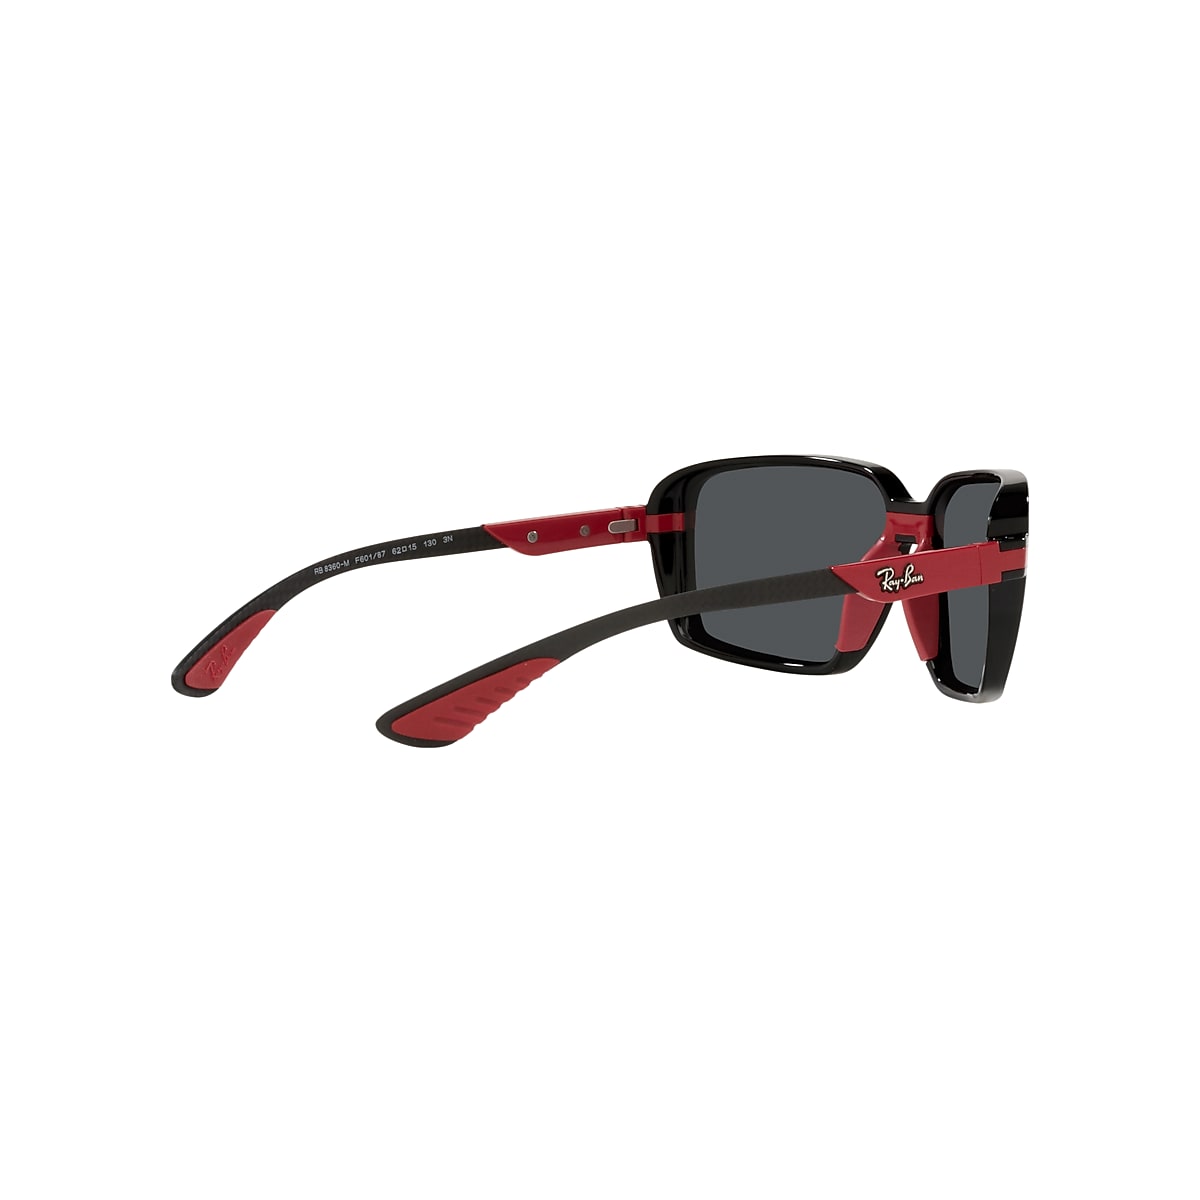 Rb8360m Scuderia Ferrari Collection Sunglasses in Black and Light Brown |  Ray-Ban®